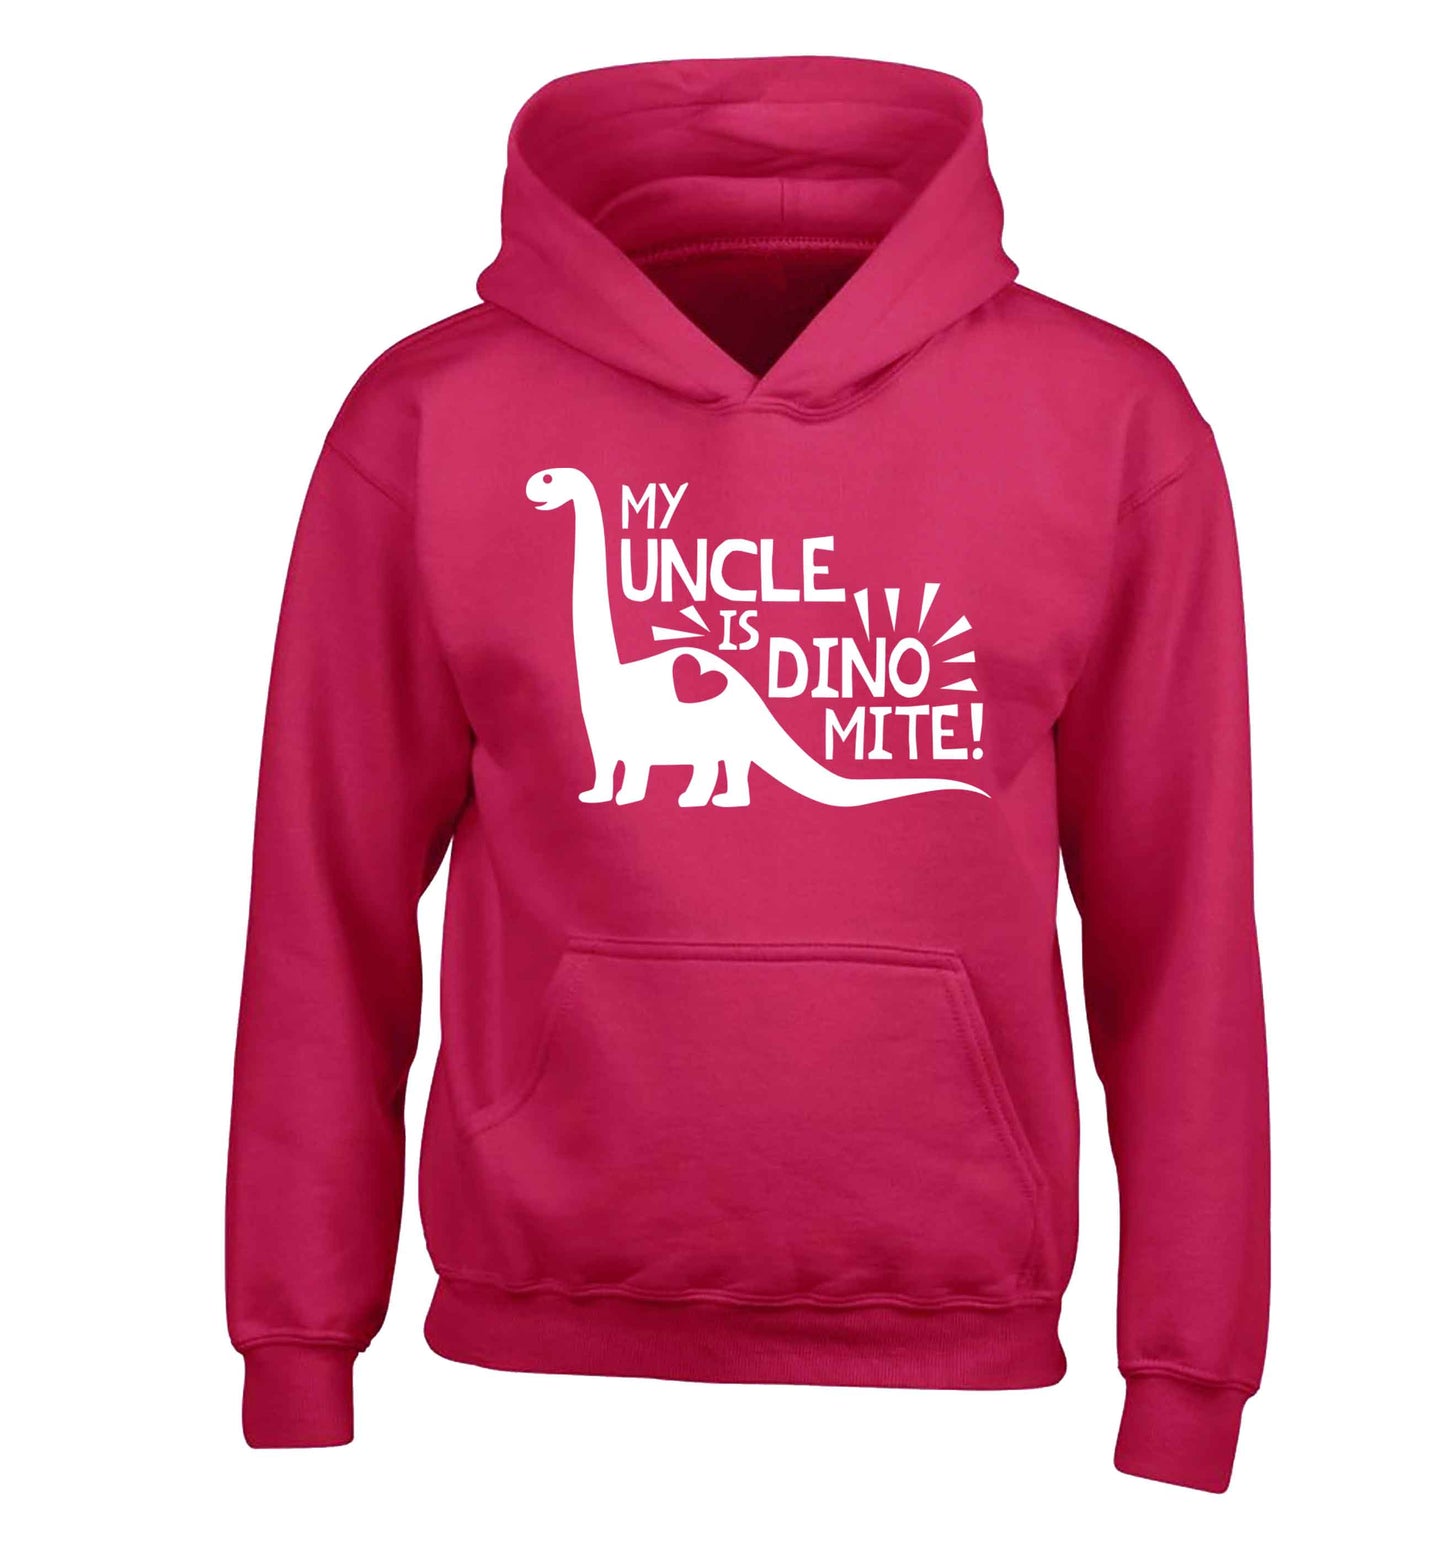 My uncle is dinomite! children's pink hoodie 12-13 Years